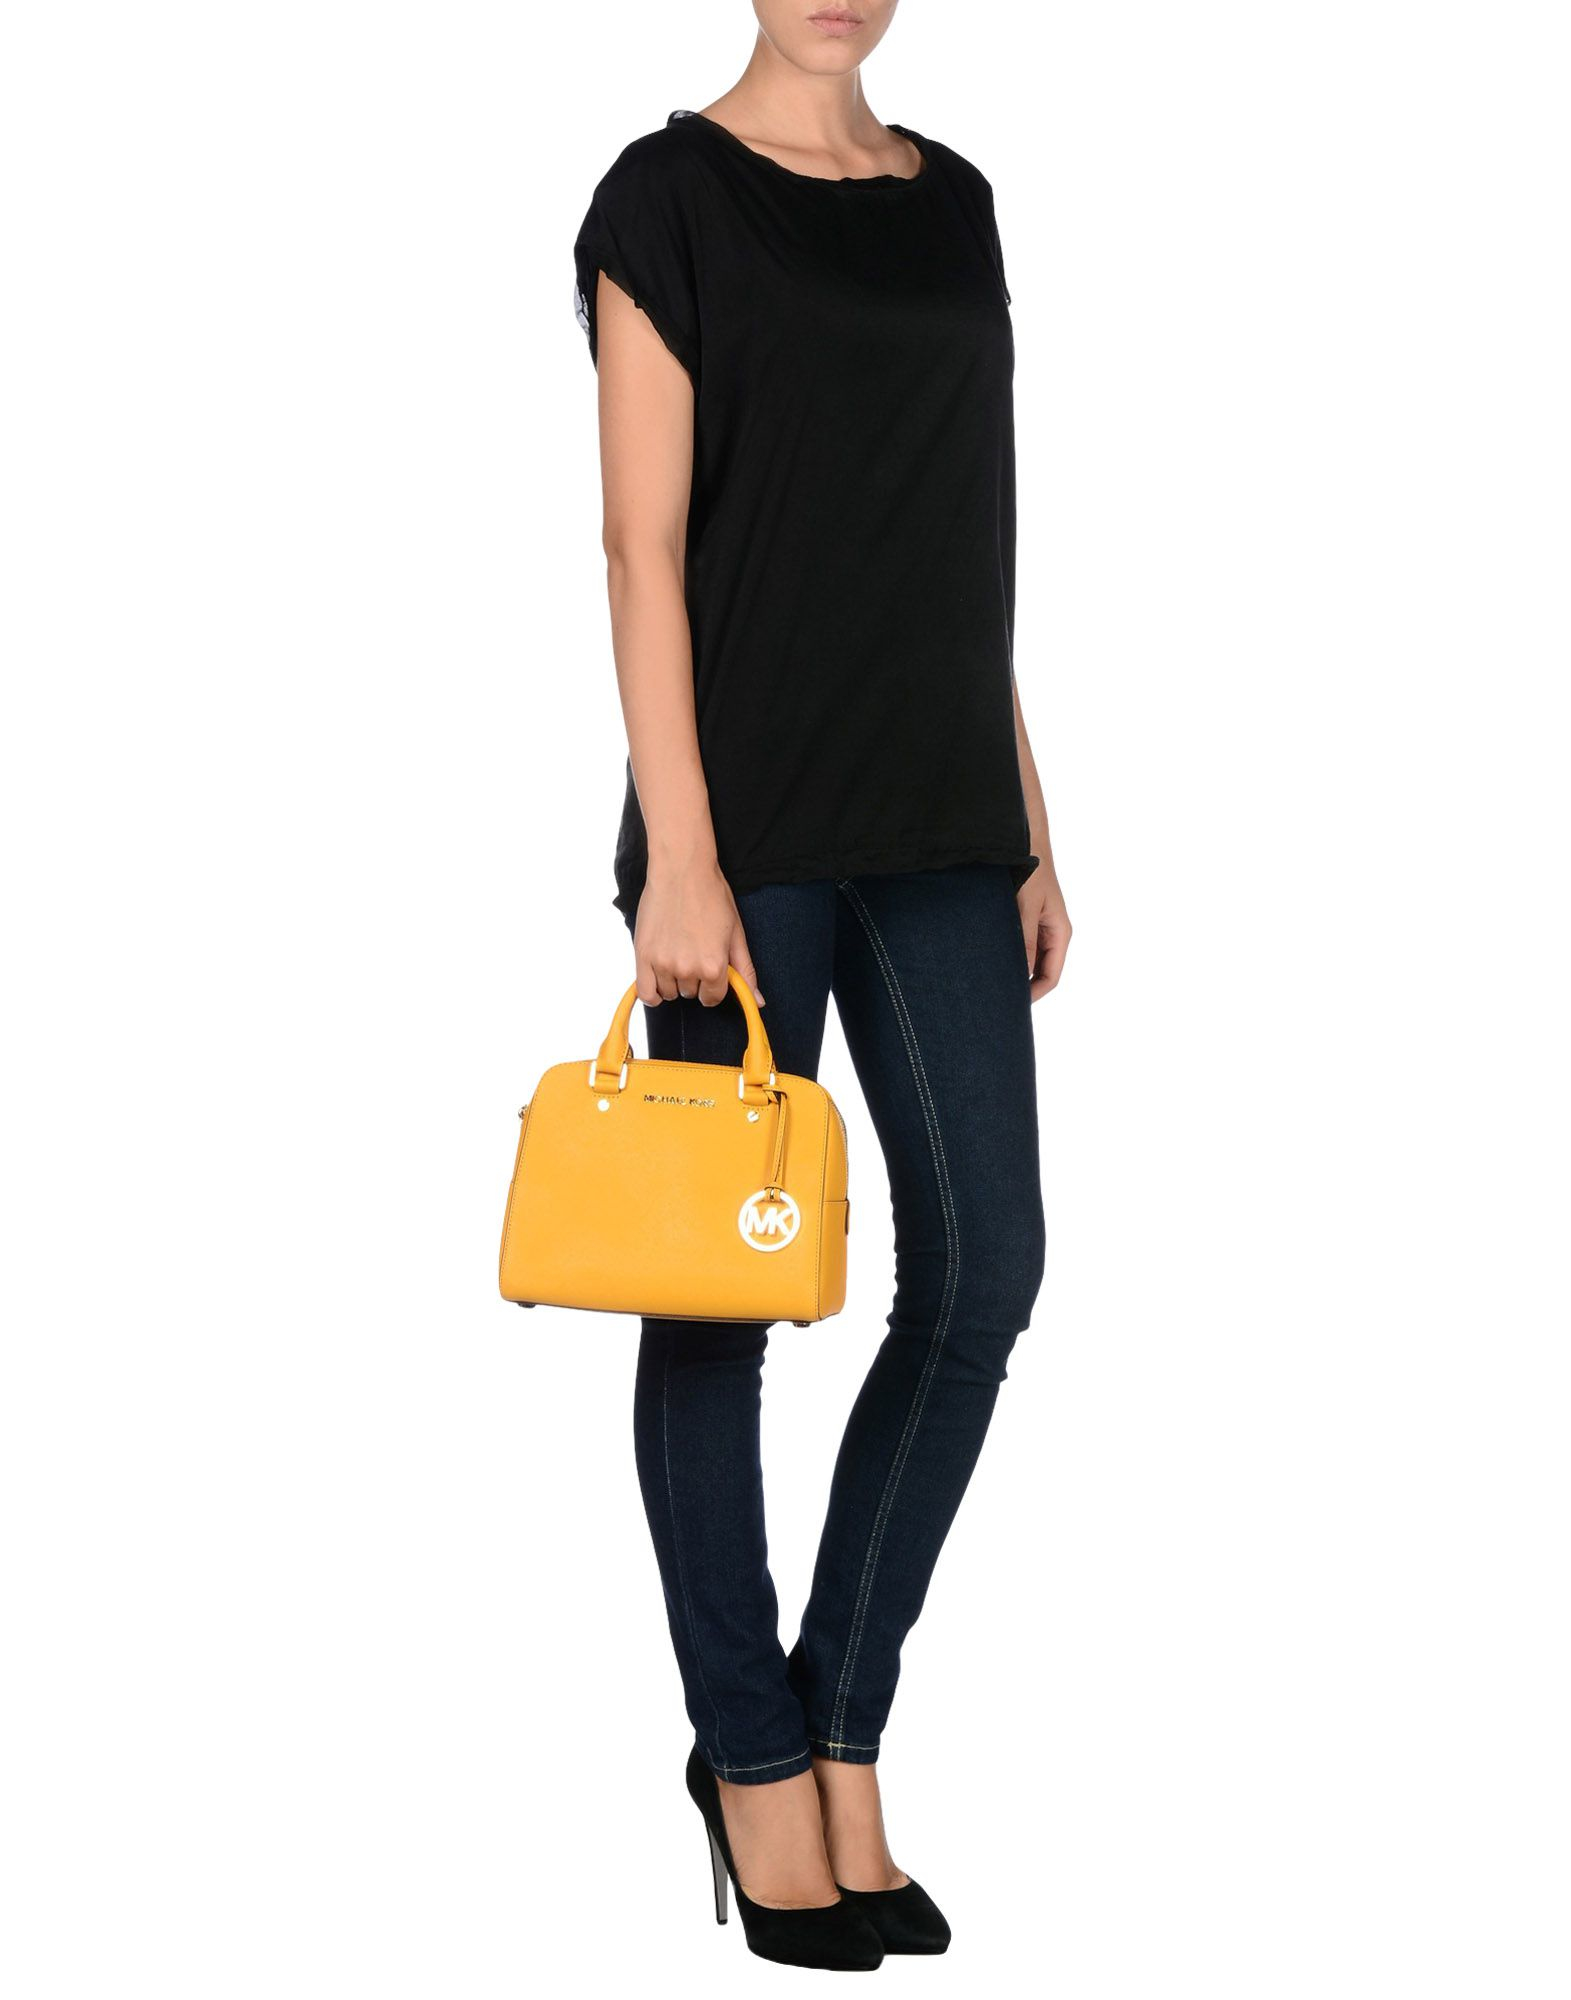 Michael Kors Yellow Leather Mini Emmy Cindy Crossbody Bag |  